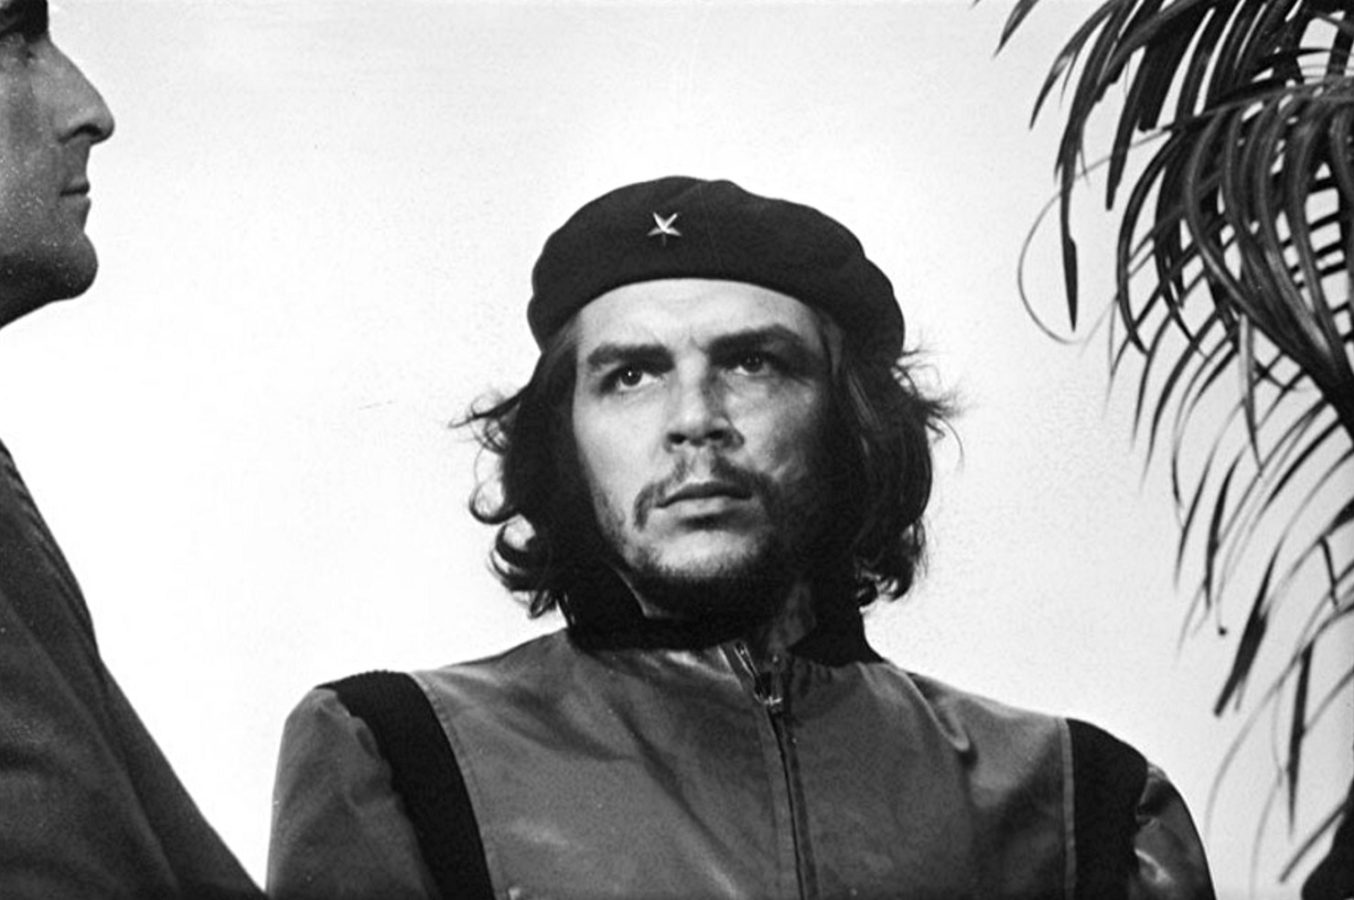 Guerrillero Heroico (Heroic Guerrilla Fighter), Alberto Korda, 1960, Pop Art and the Cuban Revolution